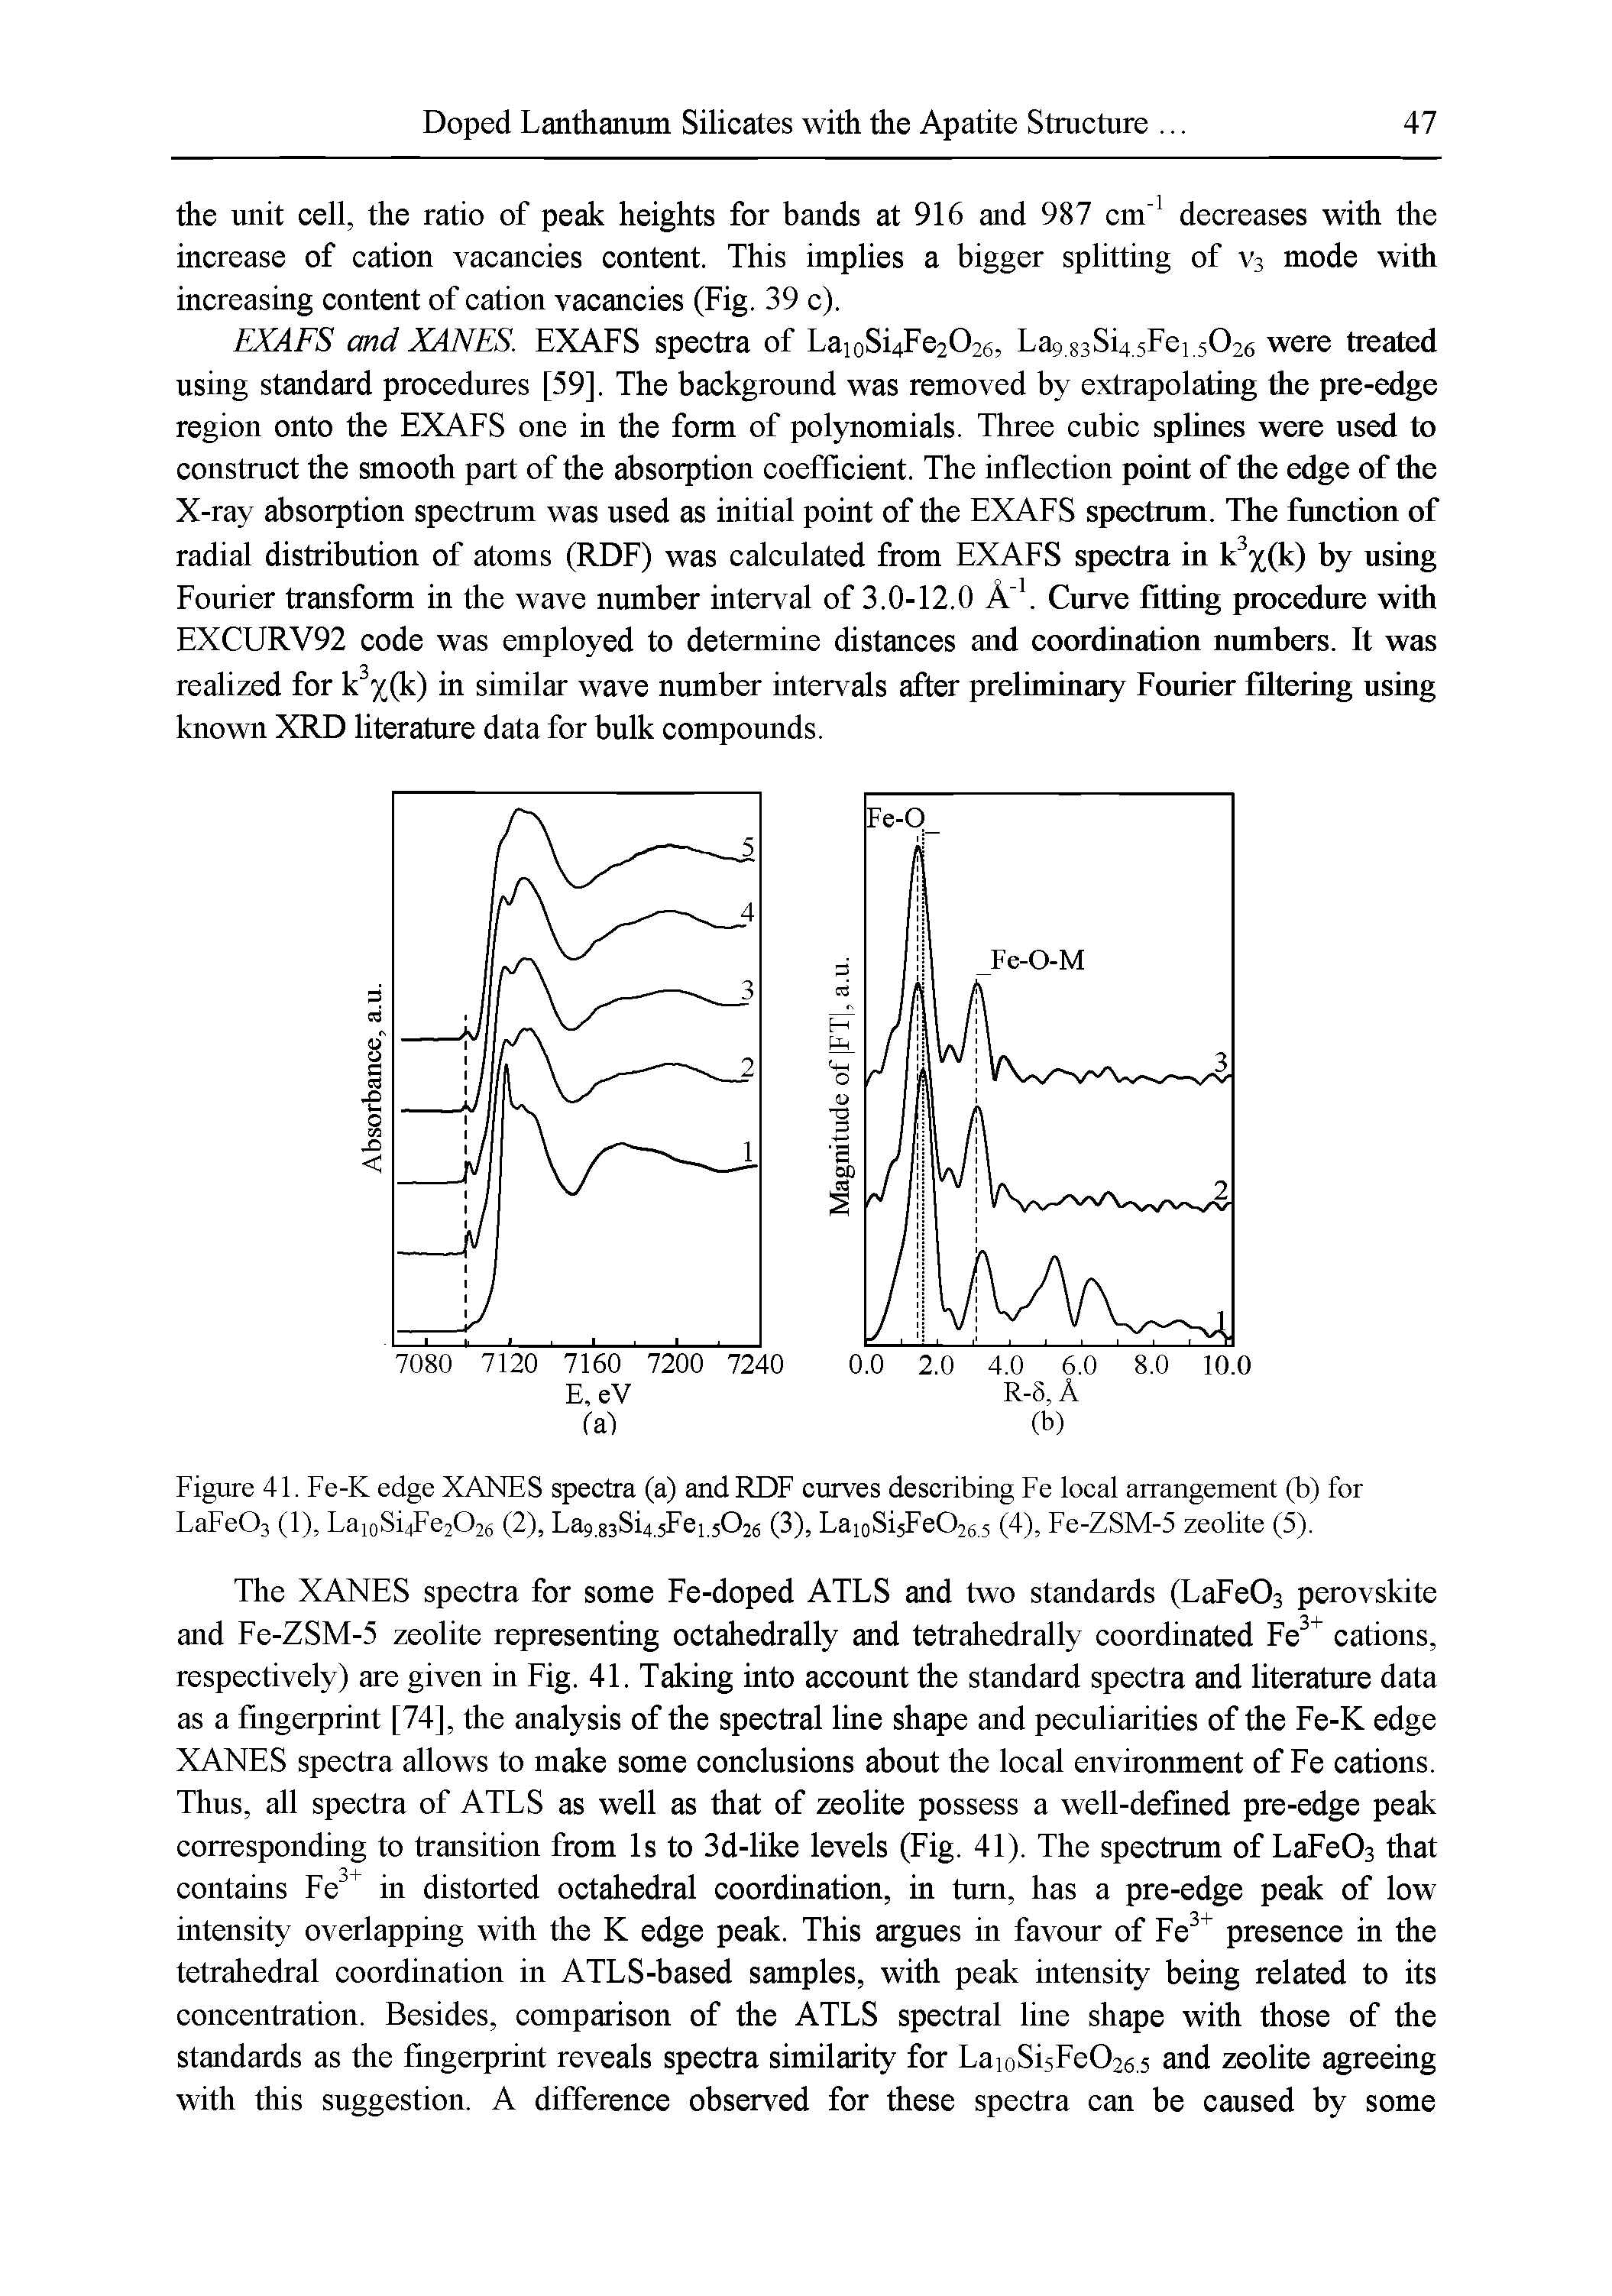 Figure 41. Fe-K edge XANES spectra (a) and RDF curves describing Fe local arrangement (b) for LaFeOs (1), LaioSi4Fe2026 (2), La9.83Si4.5Fe1.5O26 (3), LaioSi5Fe026.5 (4), Fe-ZSM-5 zeolite (5).